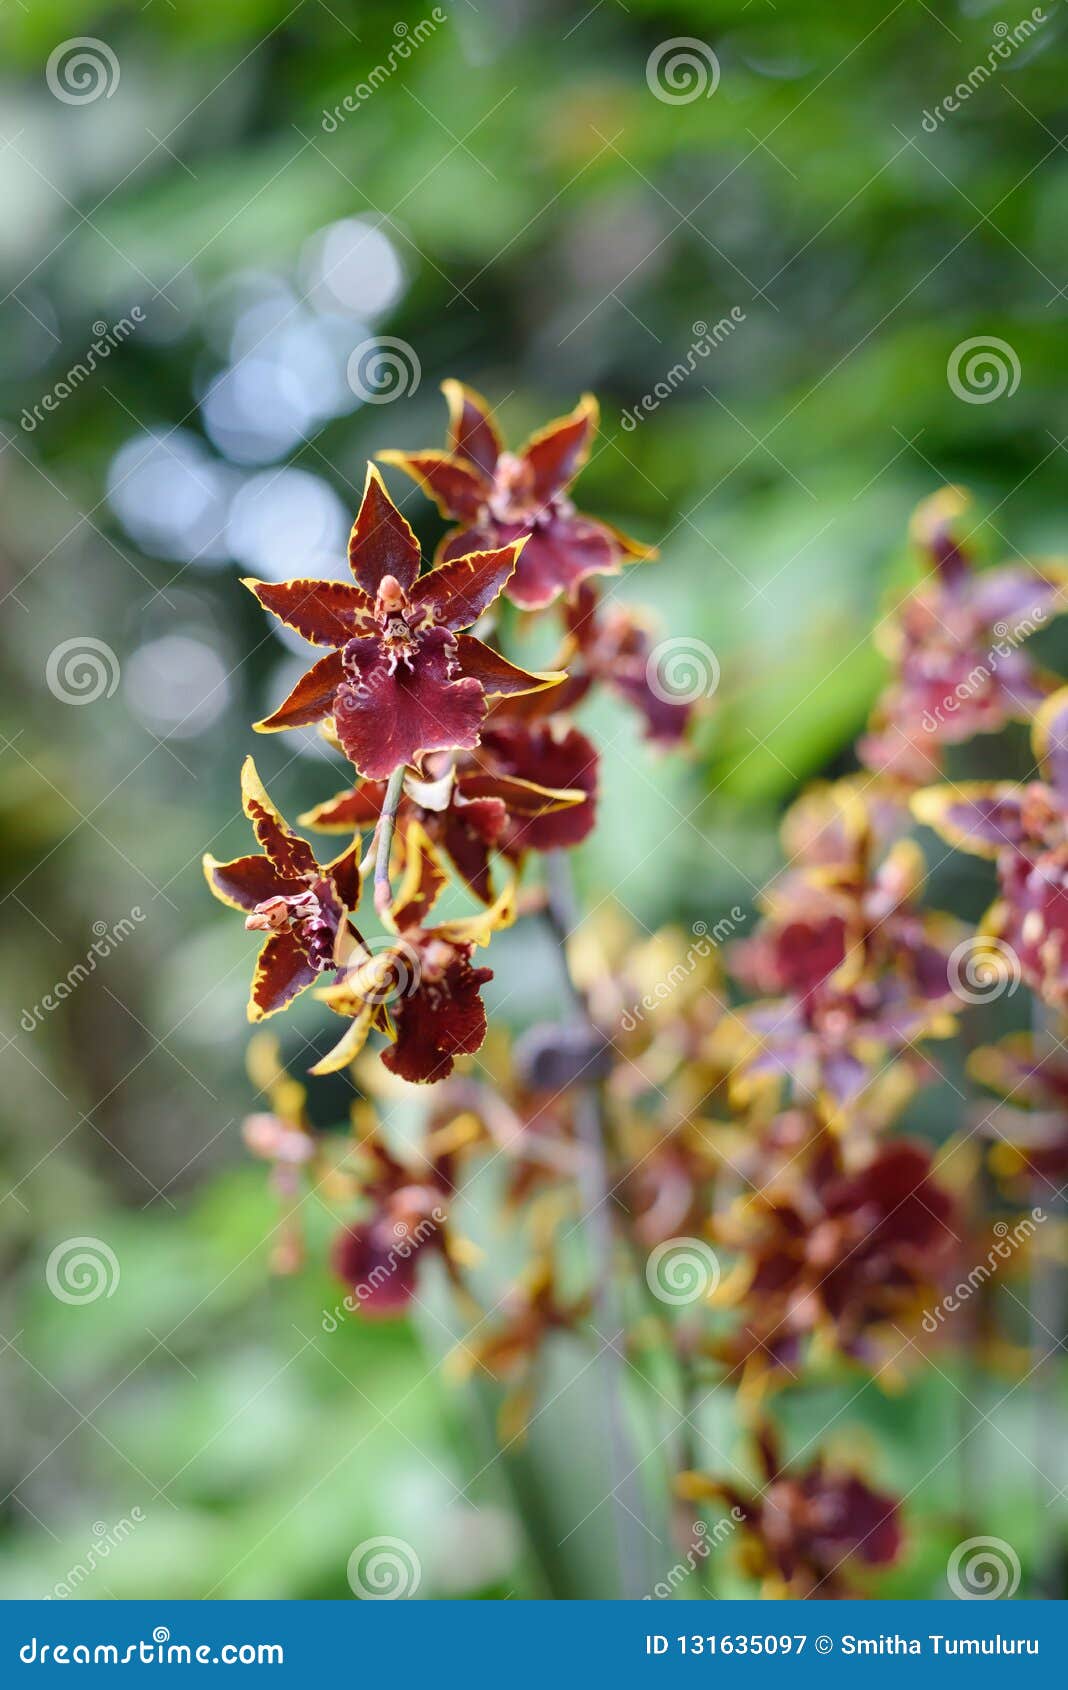 Cymbidium Orchids At Singapore Botanical Garden Stock Image Image Of Close Bunch 131635097